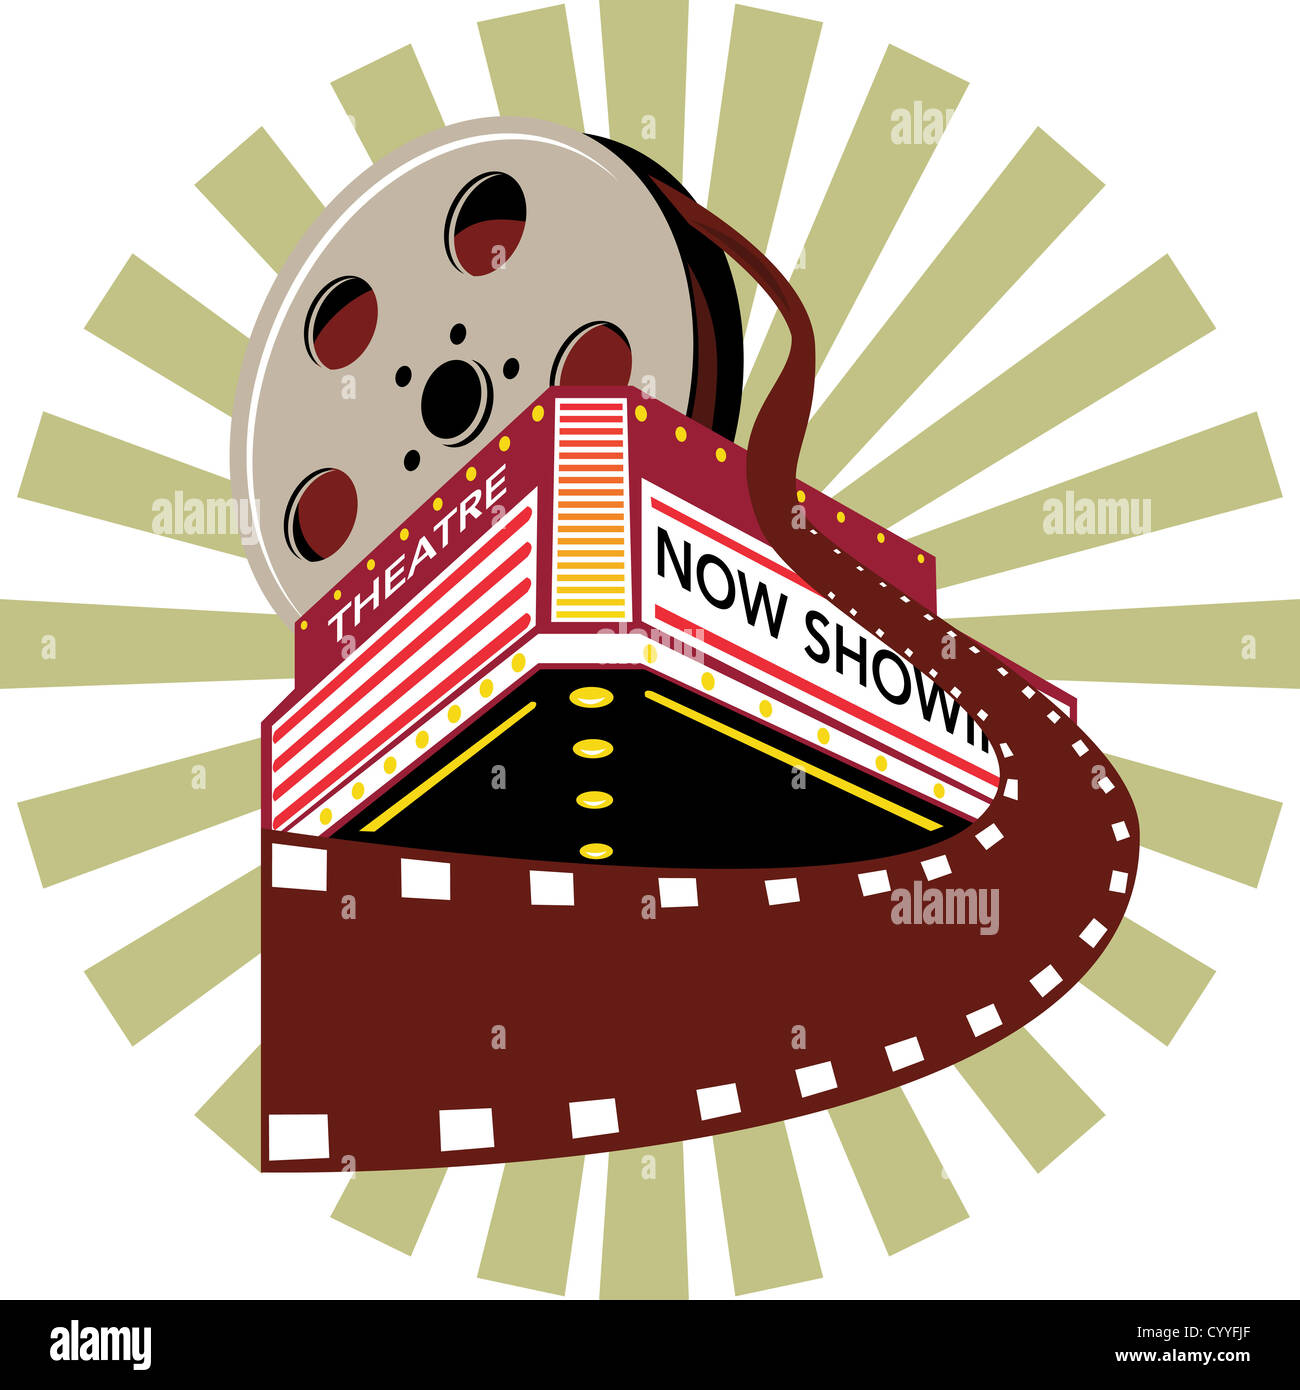 https://c8.alamy.com/comp/CYYFJF/illustration-of-a-movie-house-cinema-theater-with-film-reel-on-top-CYYFJF.jpg